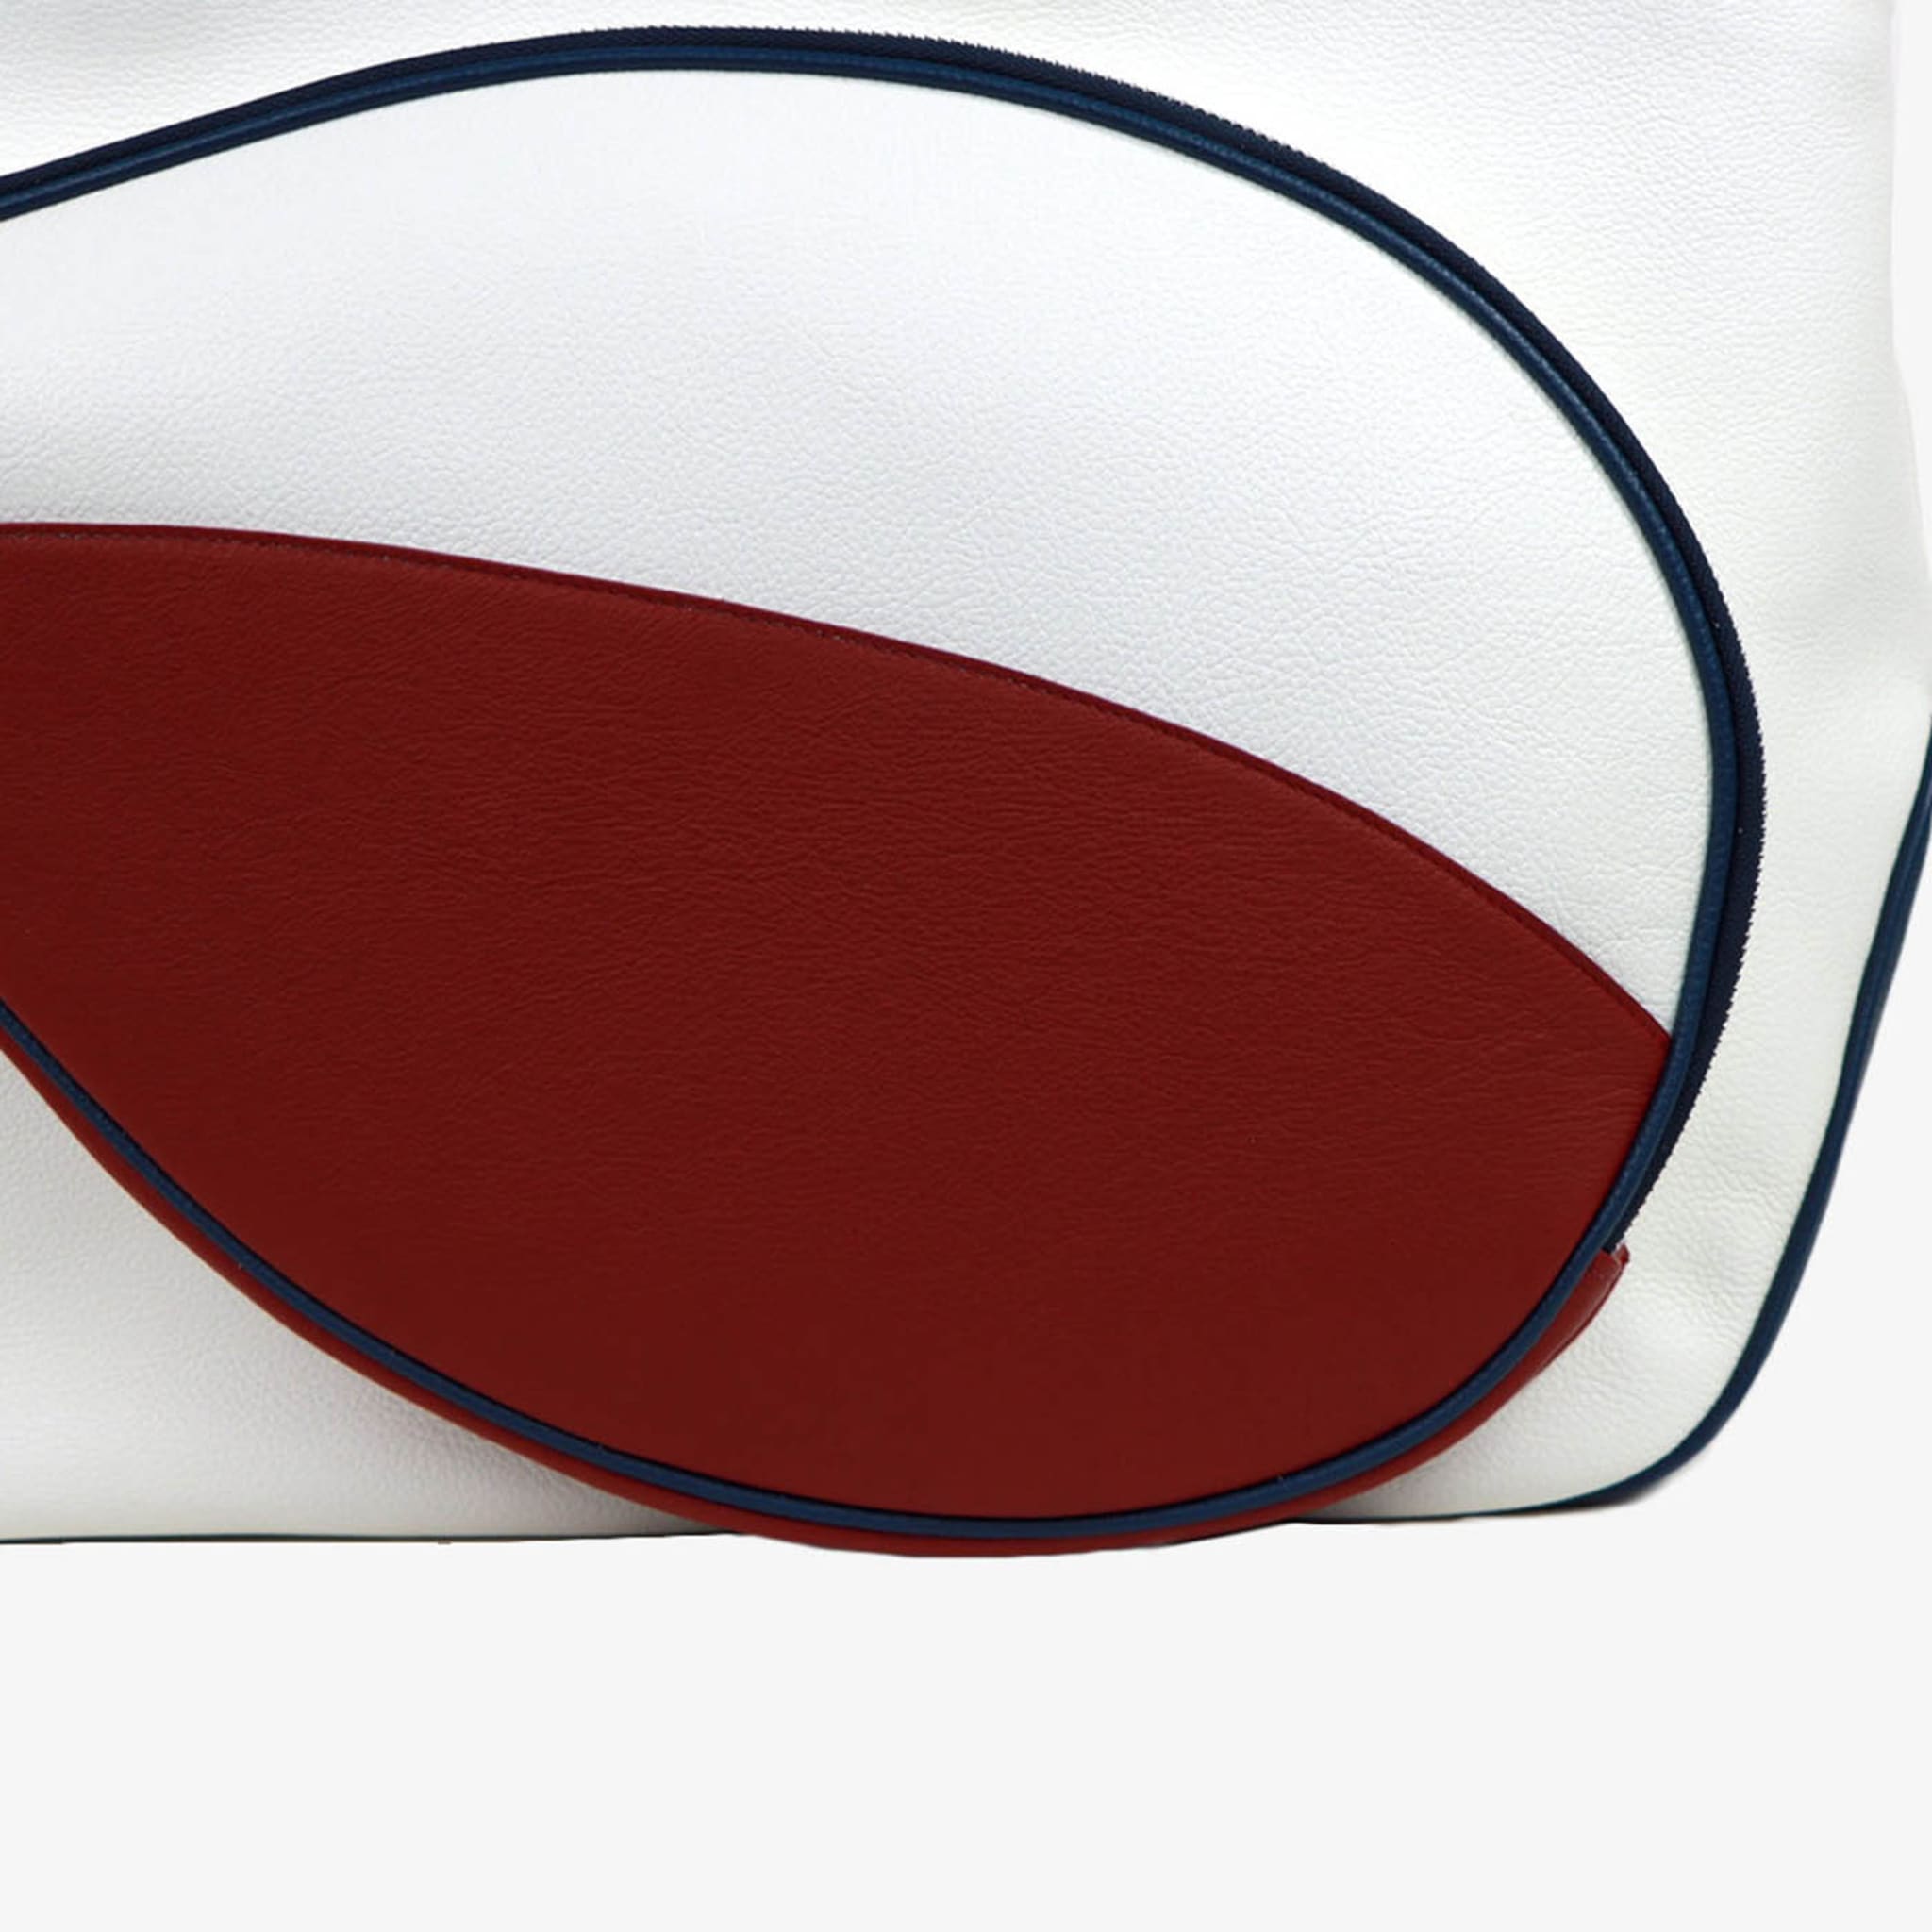 Bolsa de deporte blanca/roja/azul con bolsillo en forma de raqueta de tenis - Vista alternativa 1